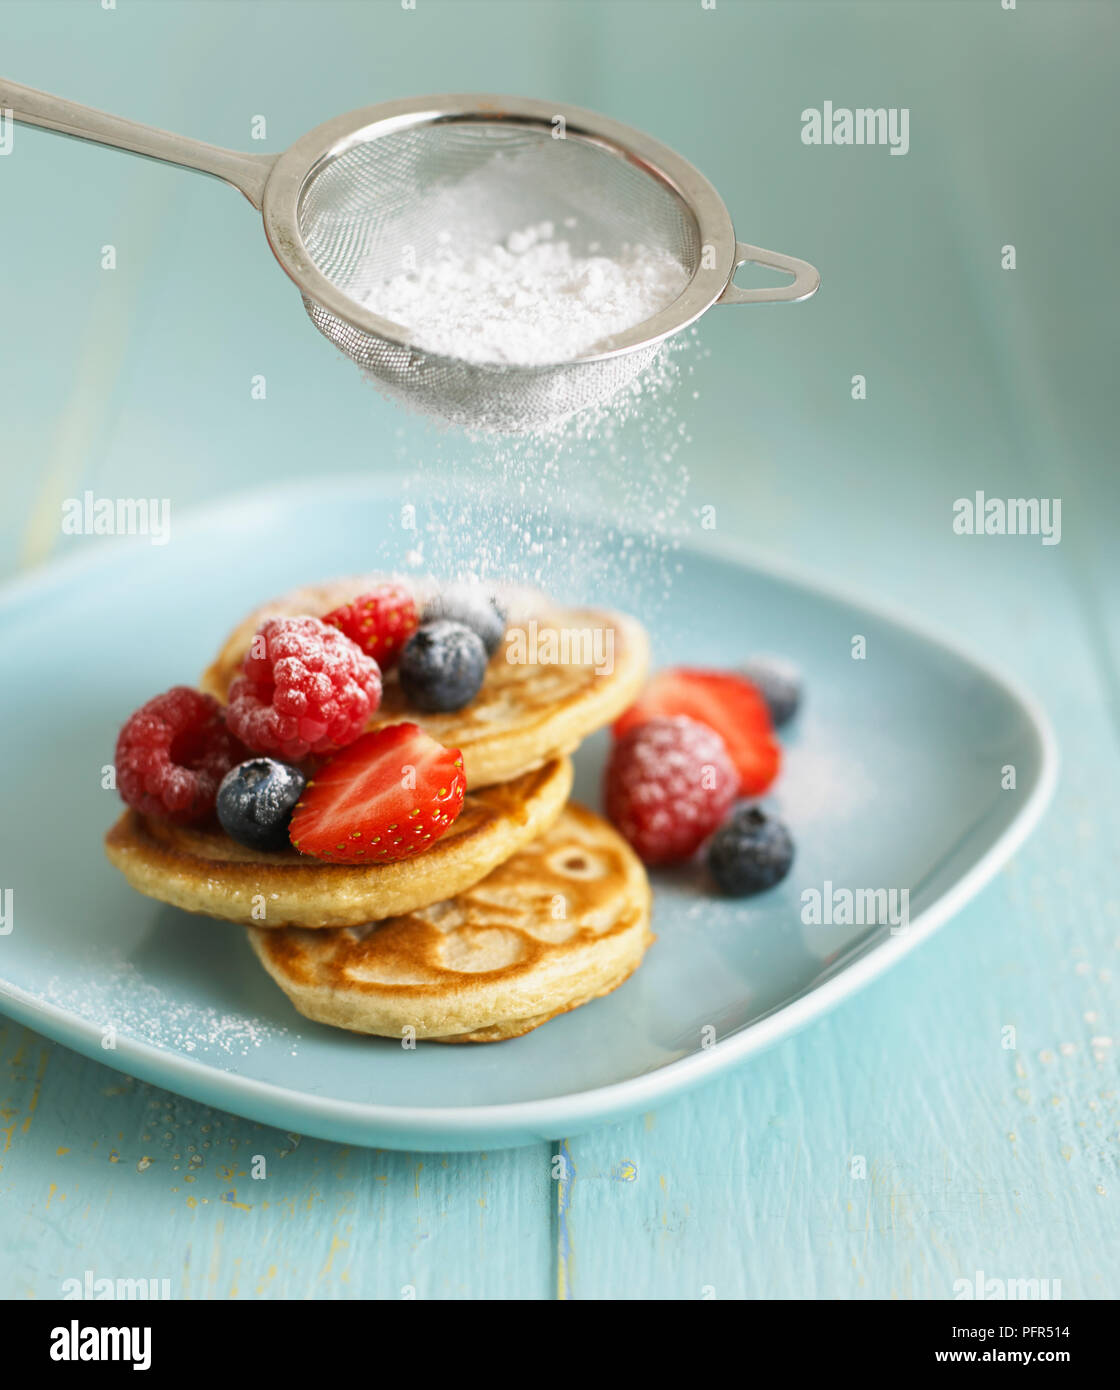 Sifting icing sugar onto fruit and pancakes Stock Photo